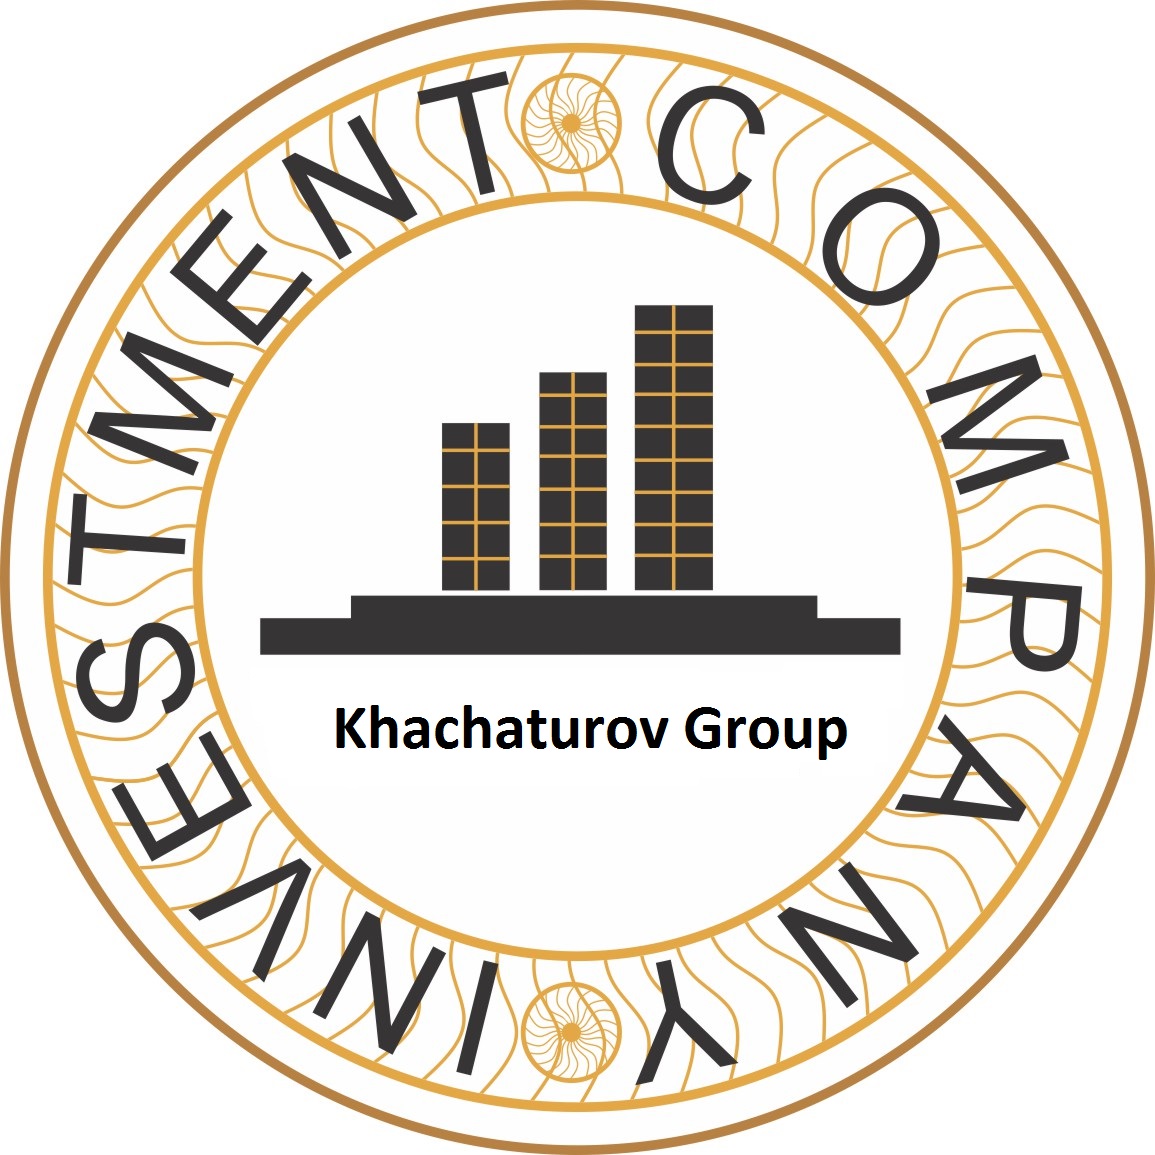 Khachaturov Group